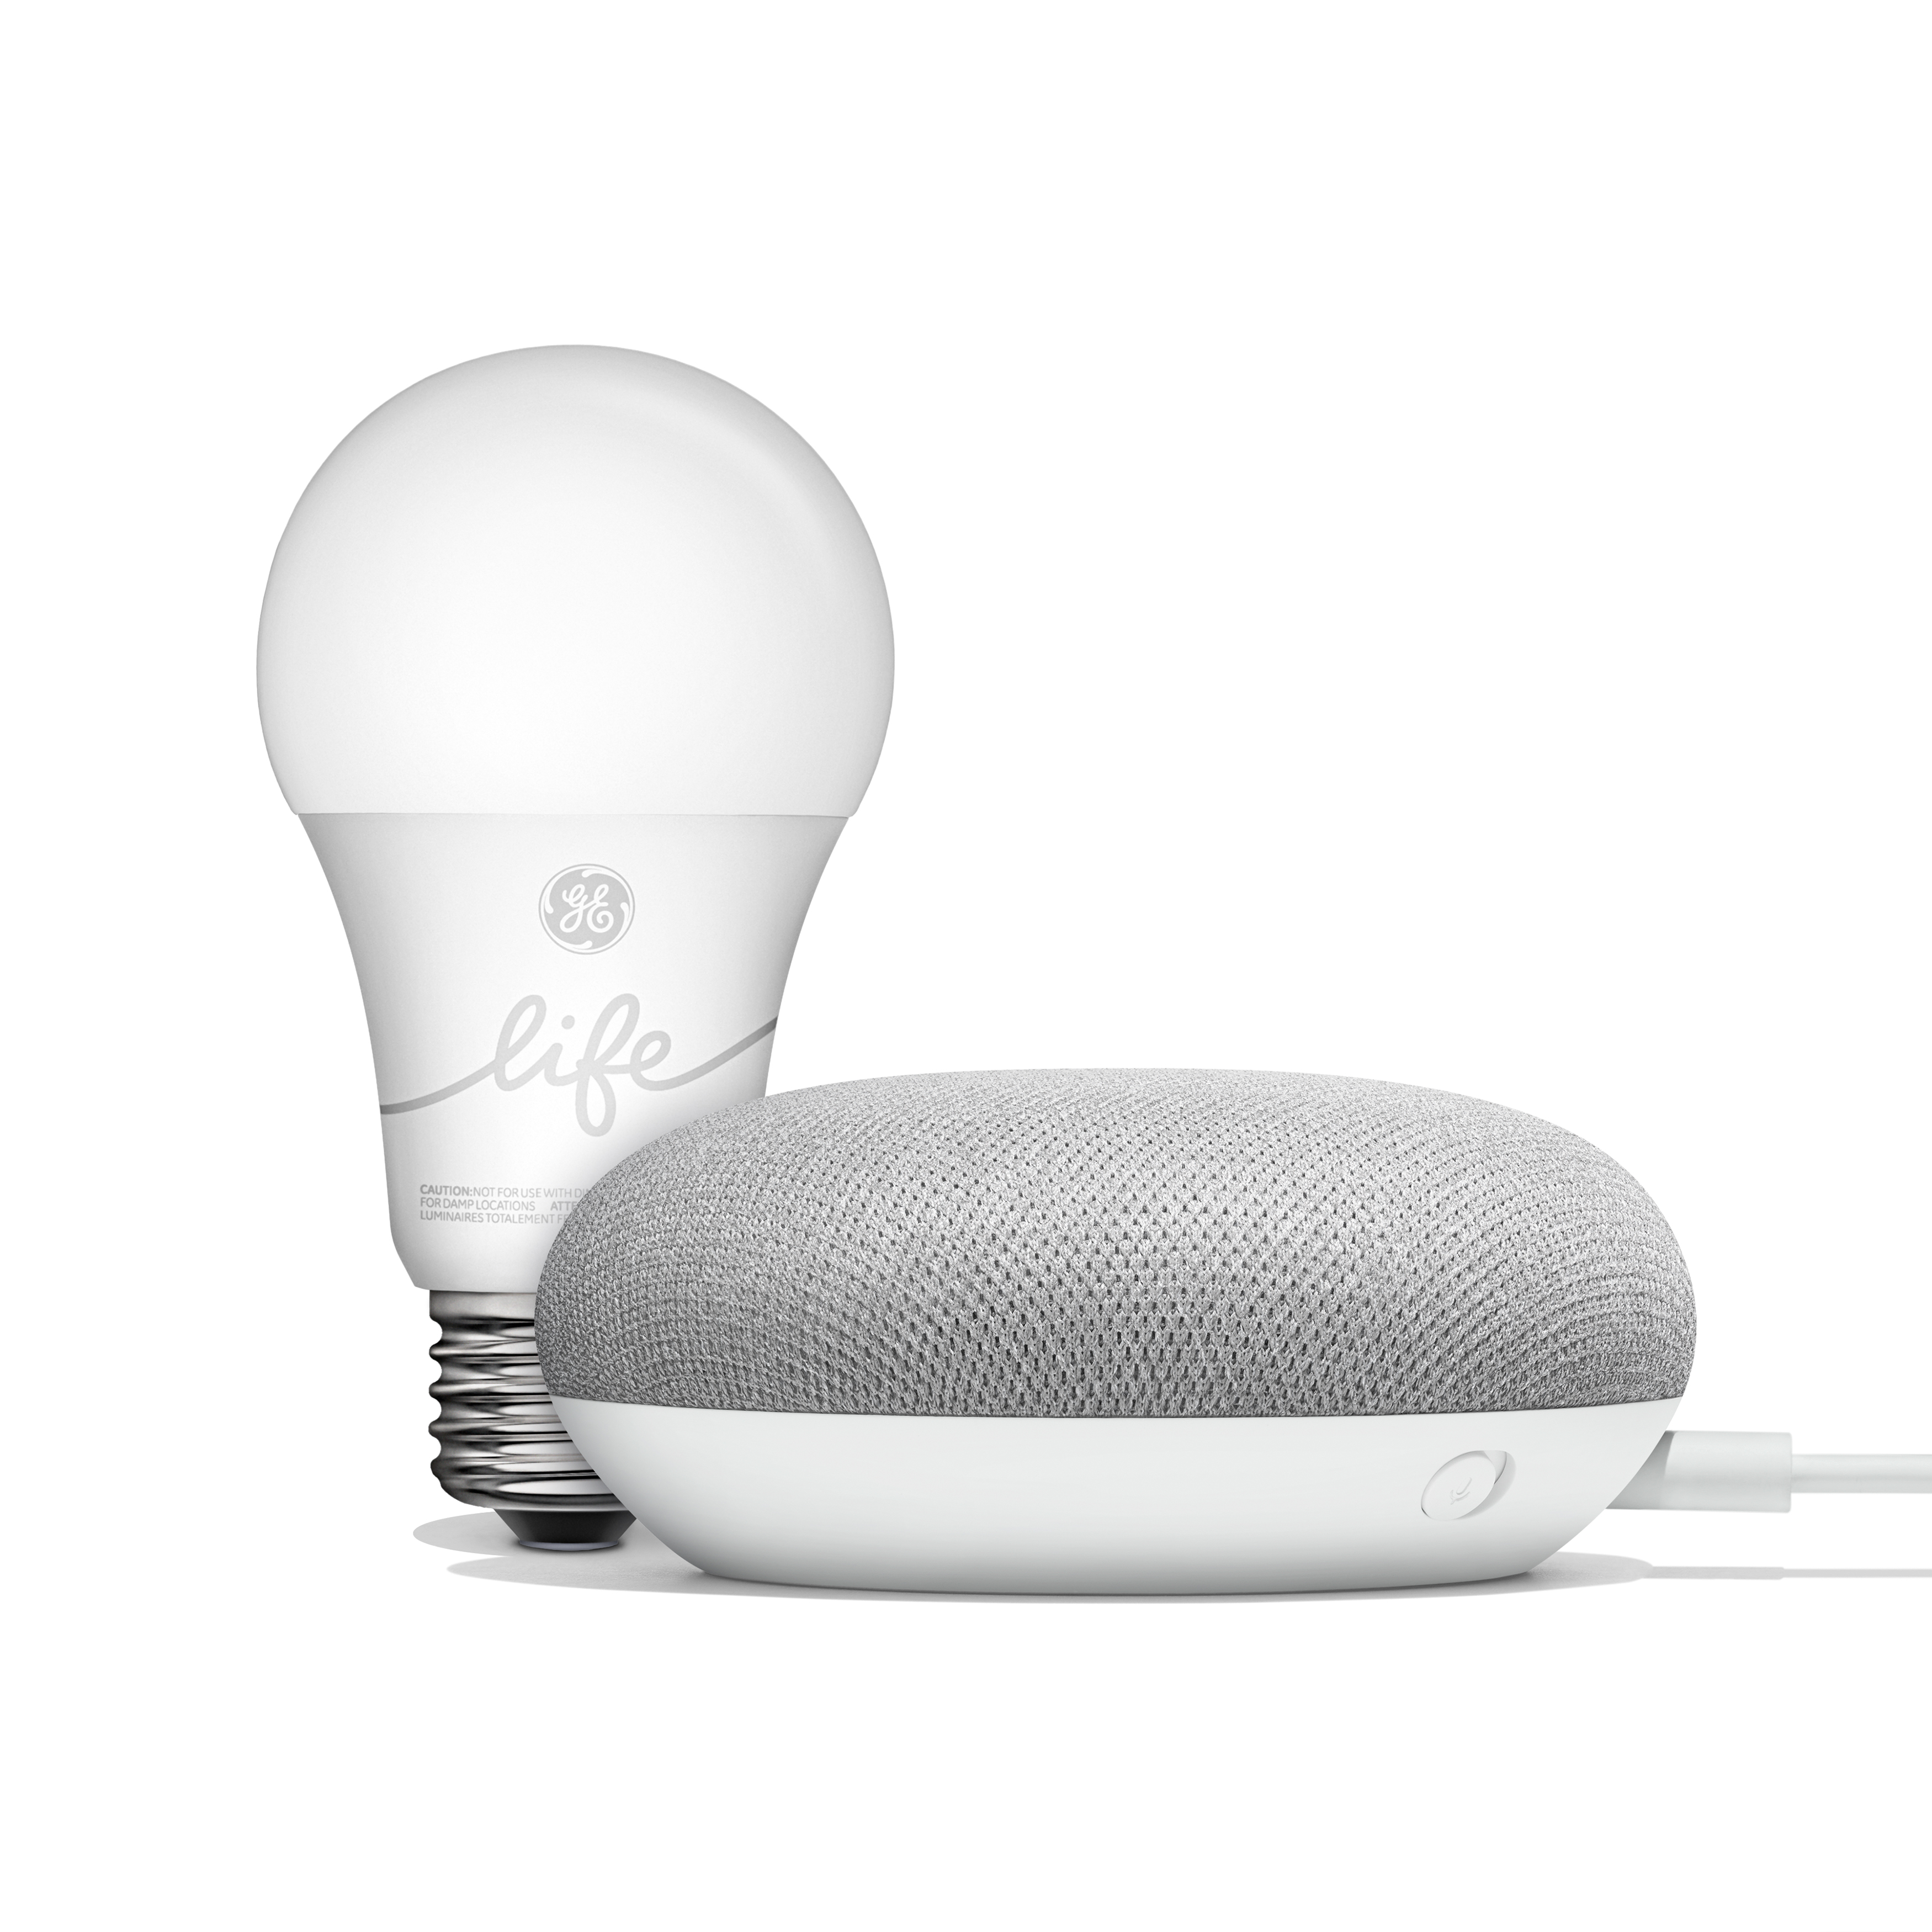 Google Smart Light Starter Kit - Google Home Mini and GE C-Life Smart Light Bulb - image 4 of 5